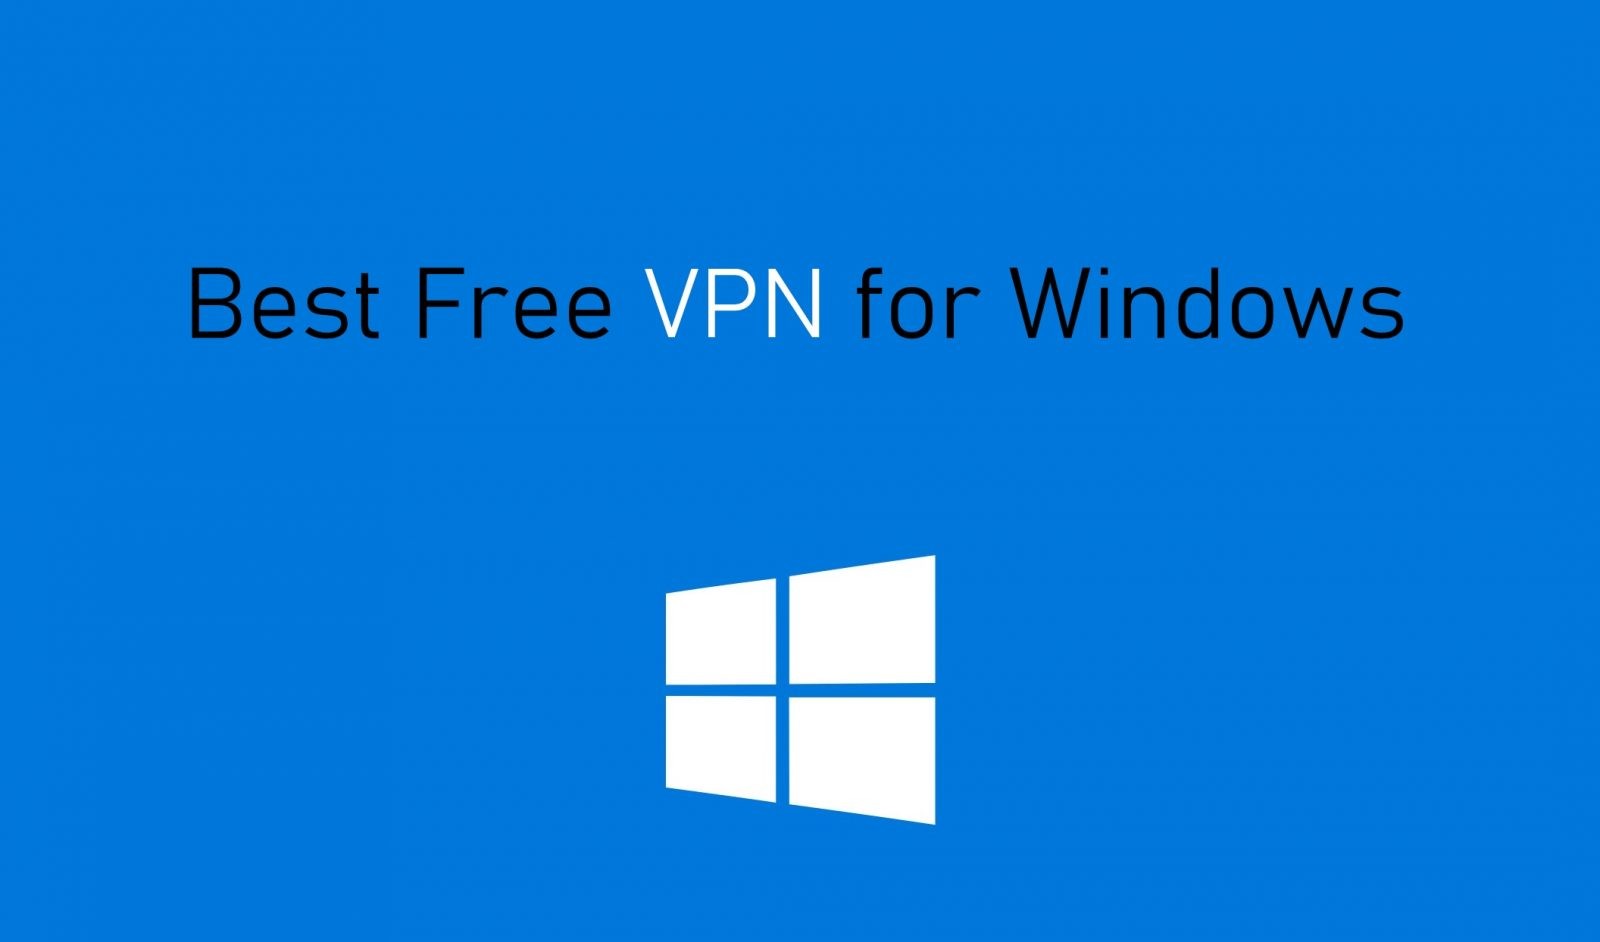 dl free vpn for windows